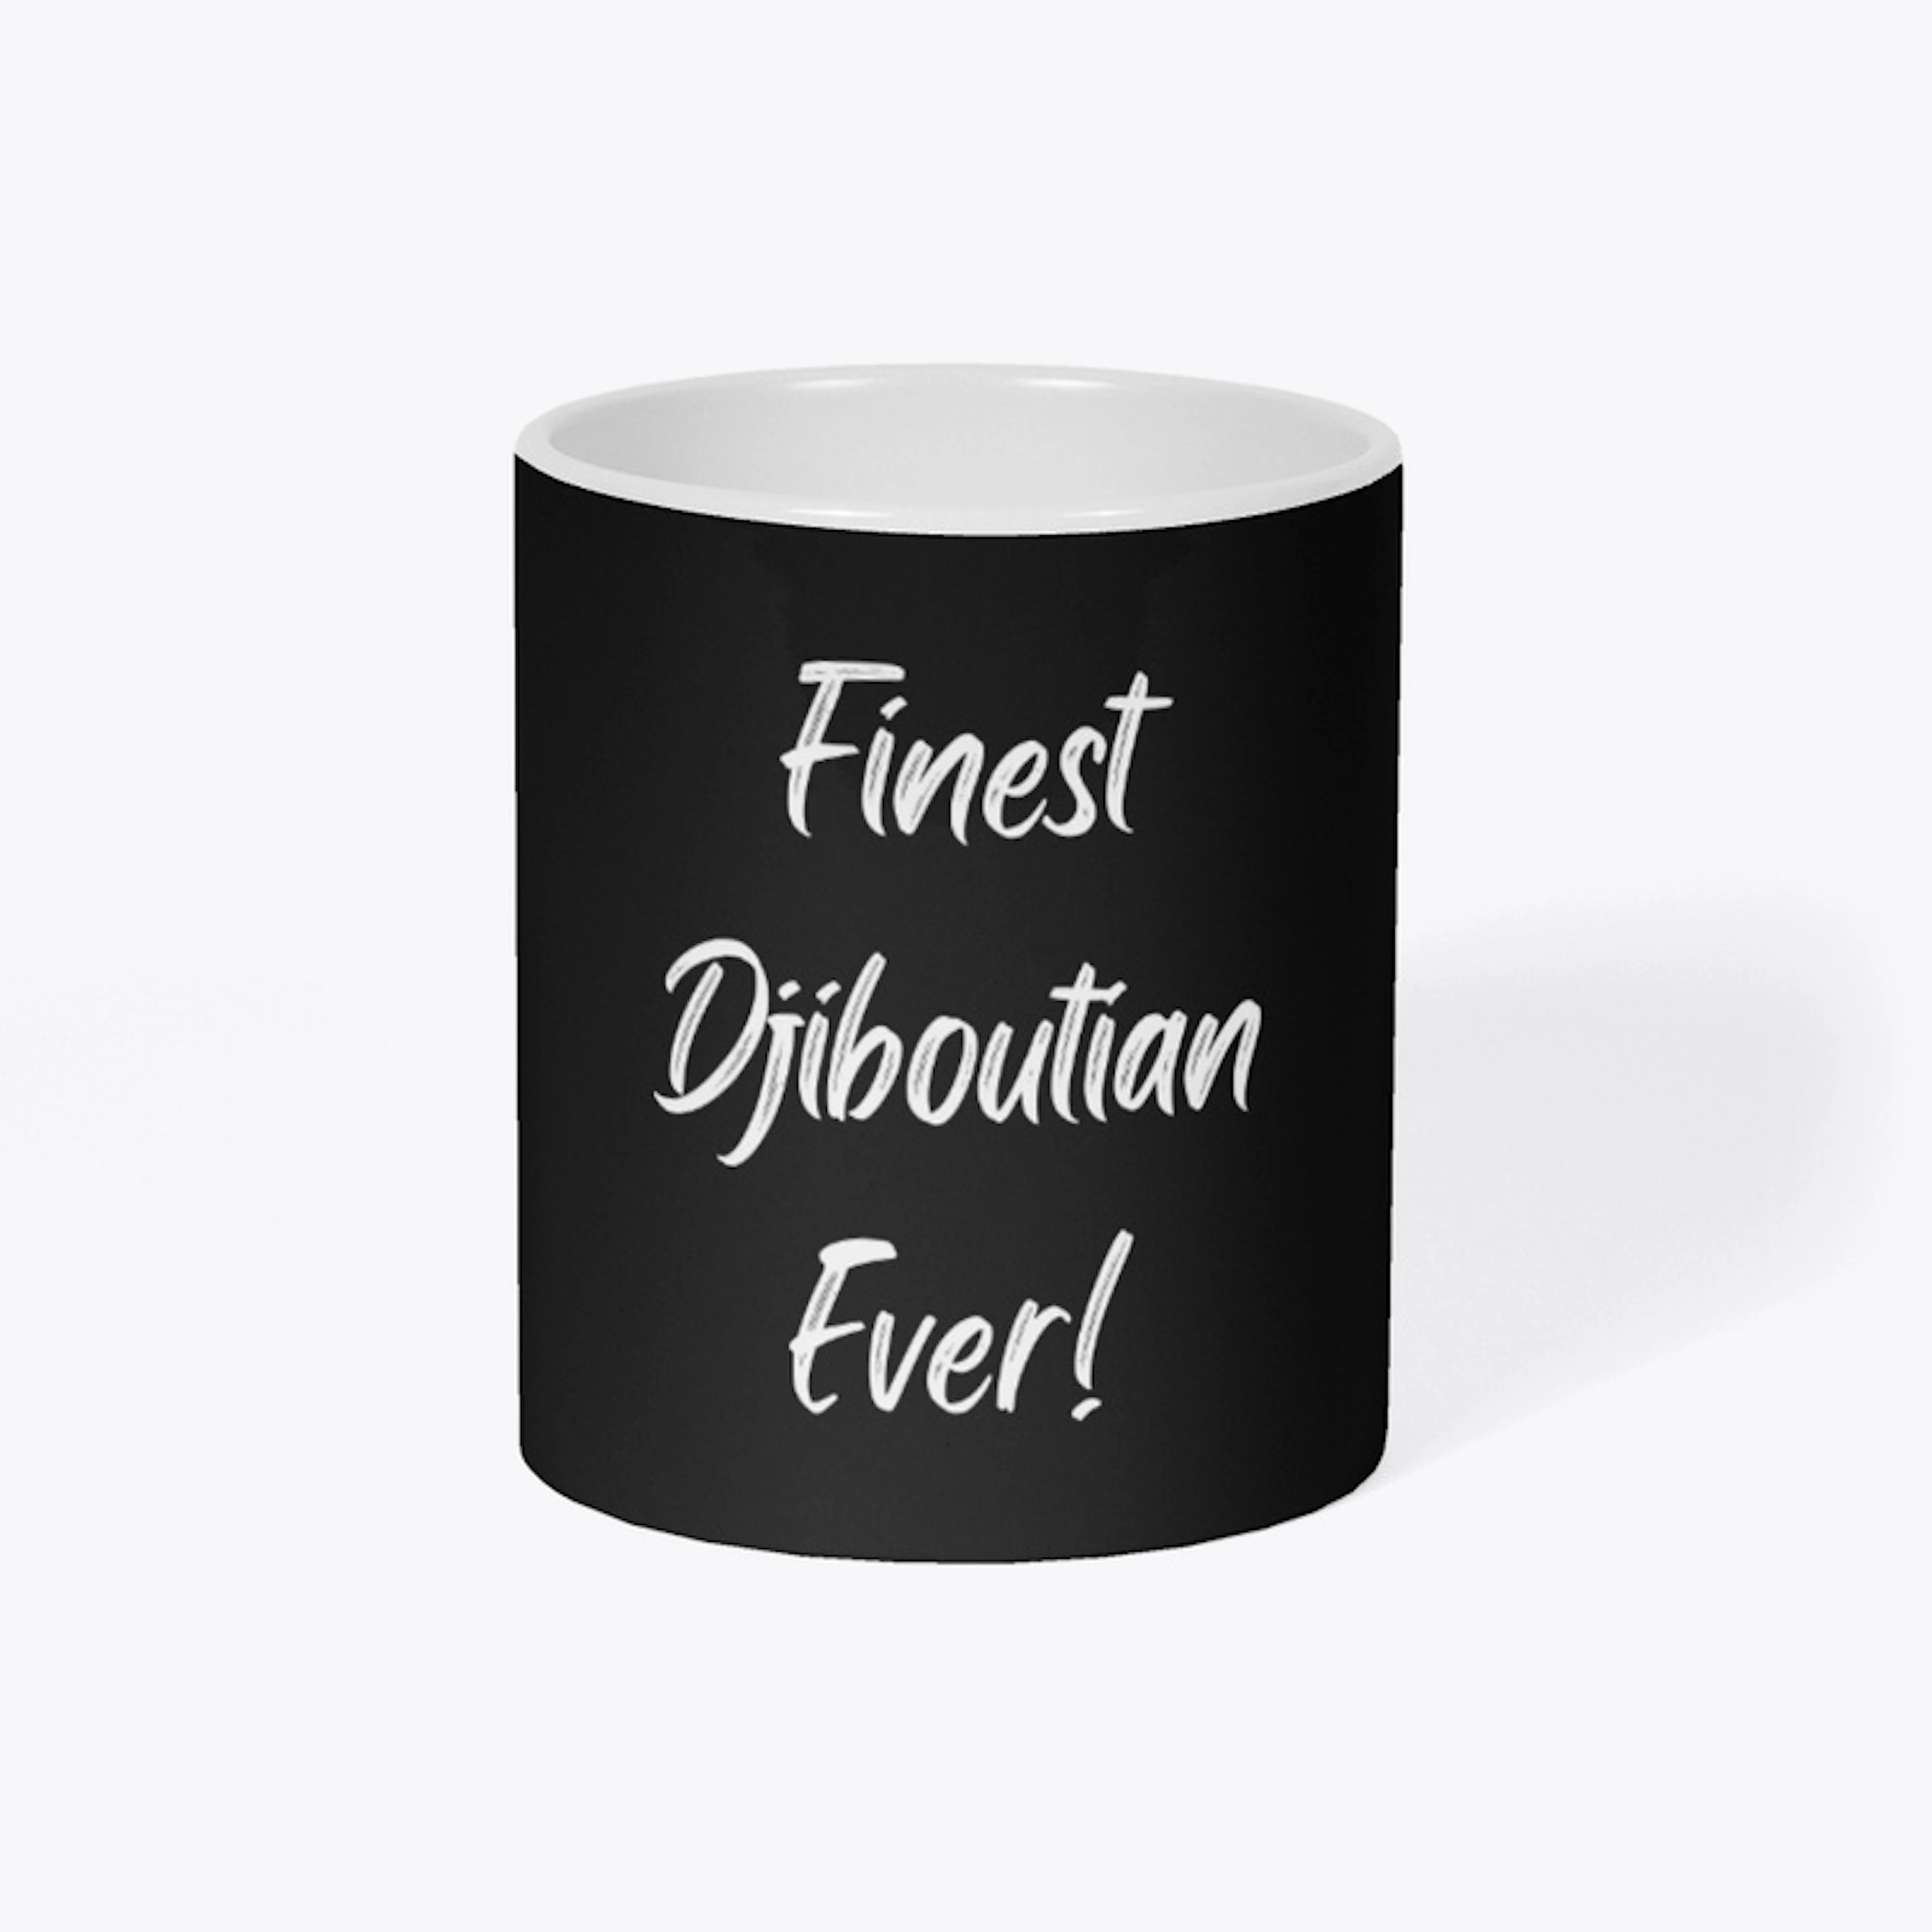 Finest Djiboutian Ever!